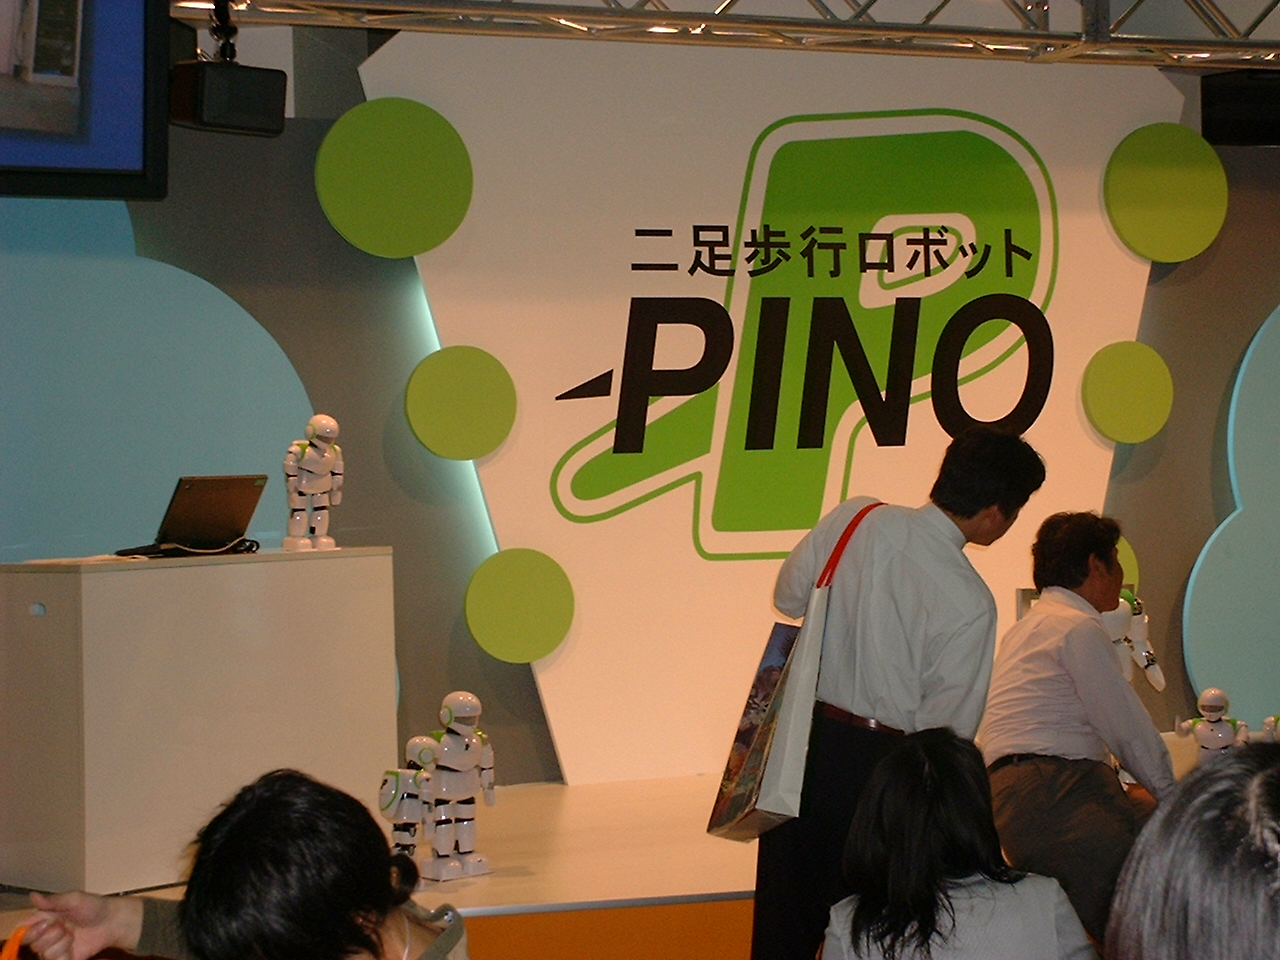 small robots on display near the pino logo